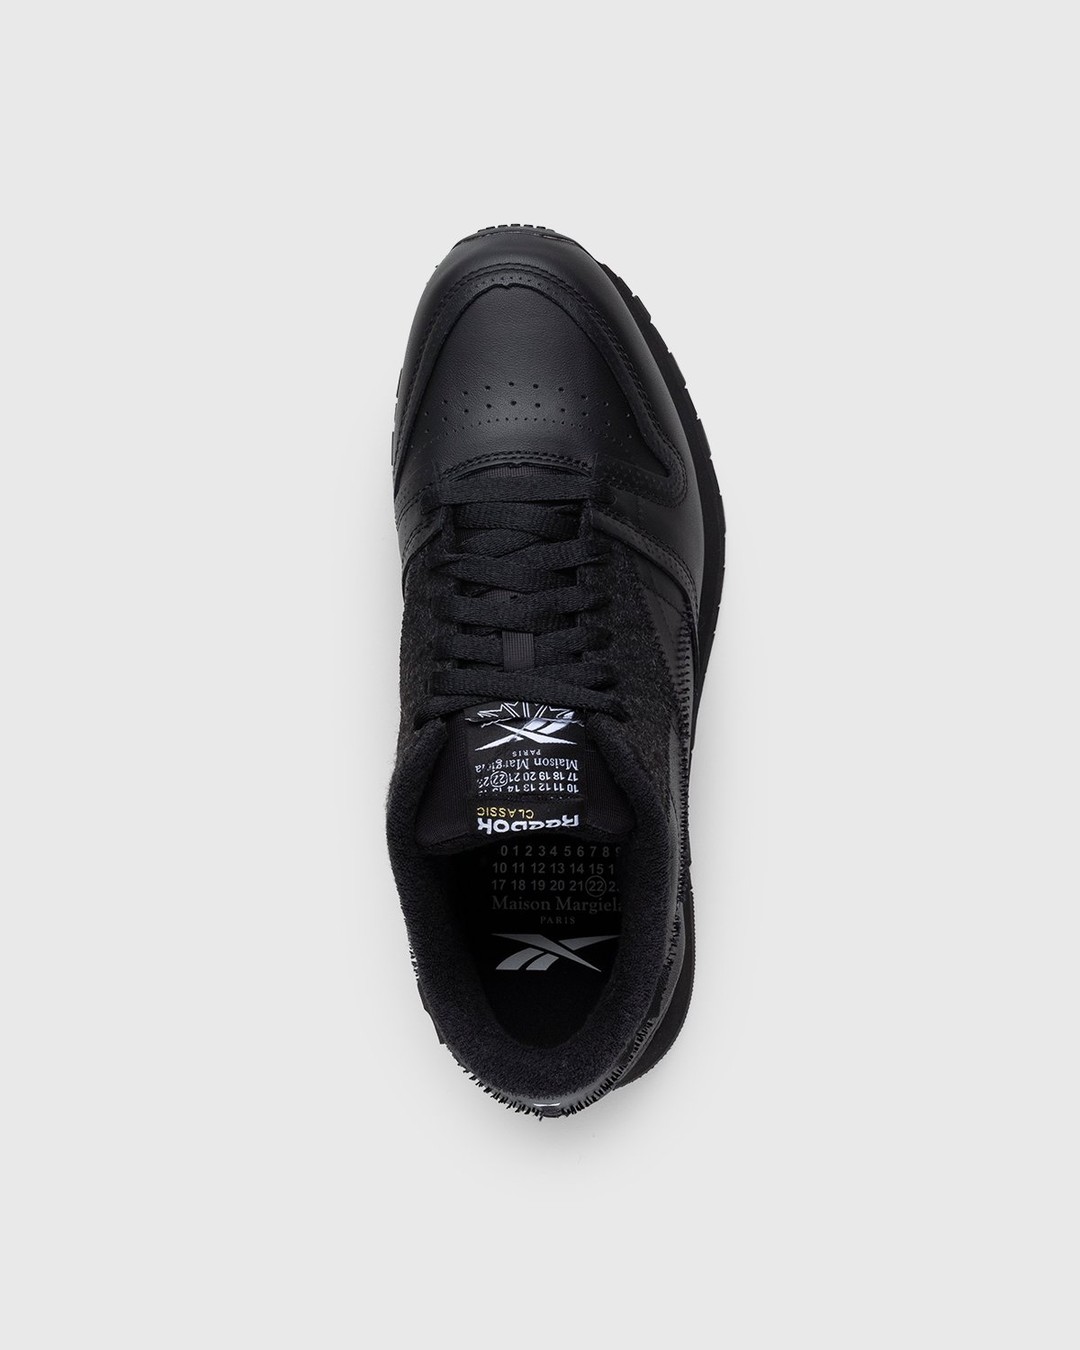 Margiela x Reebok Classic Leather Memory Of Black/Footwear White/Black Highsnobiety Shop